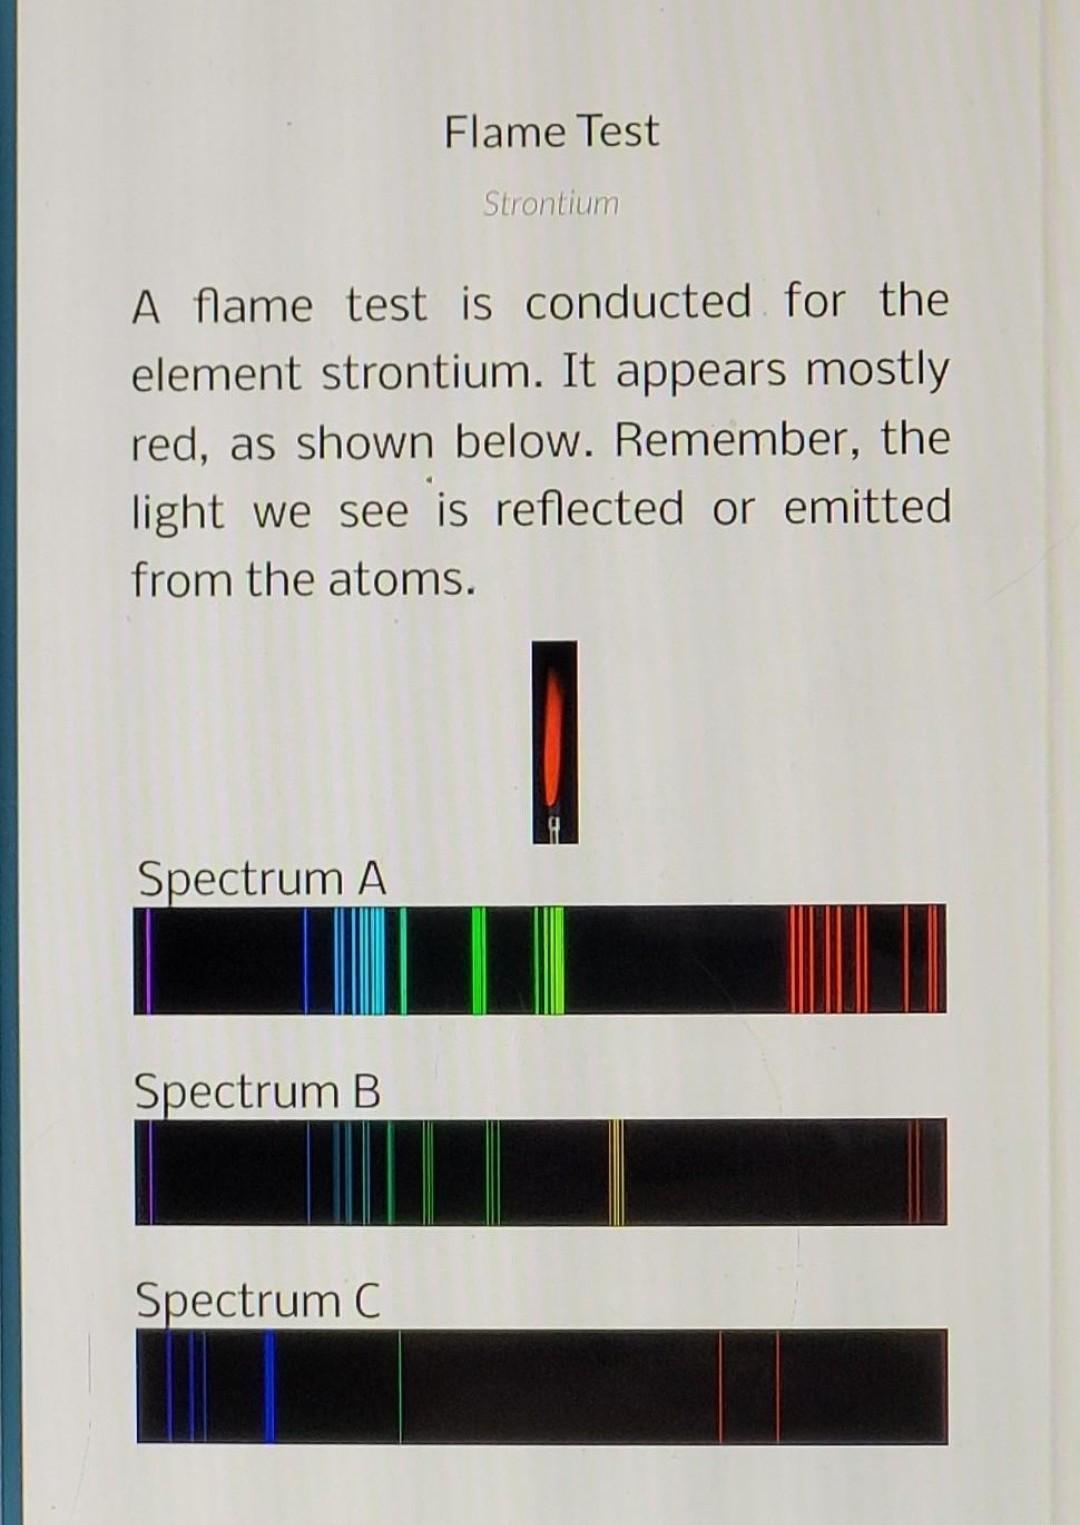 Which Emission Spectrum Represents The Copper? A.) Spectrum A B.) Spectrum B C.) Spectrum C